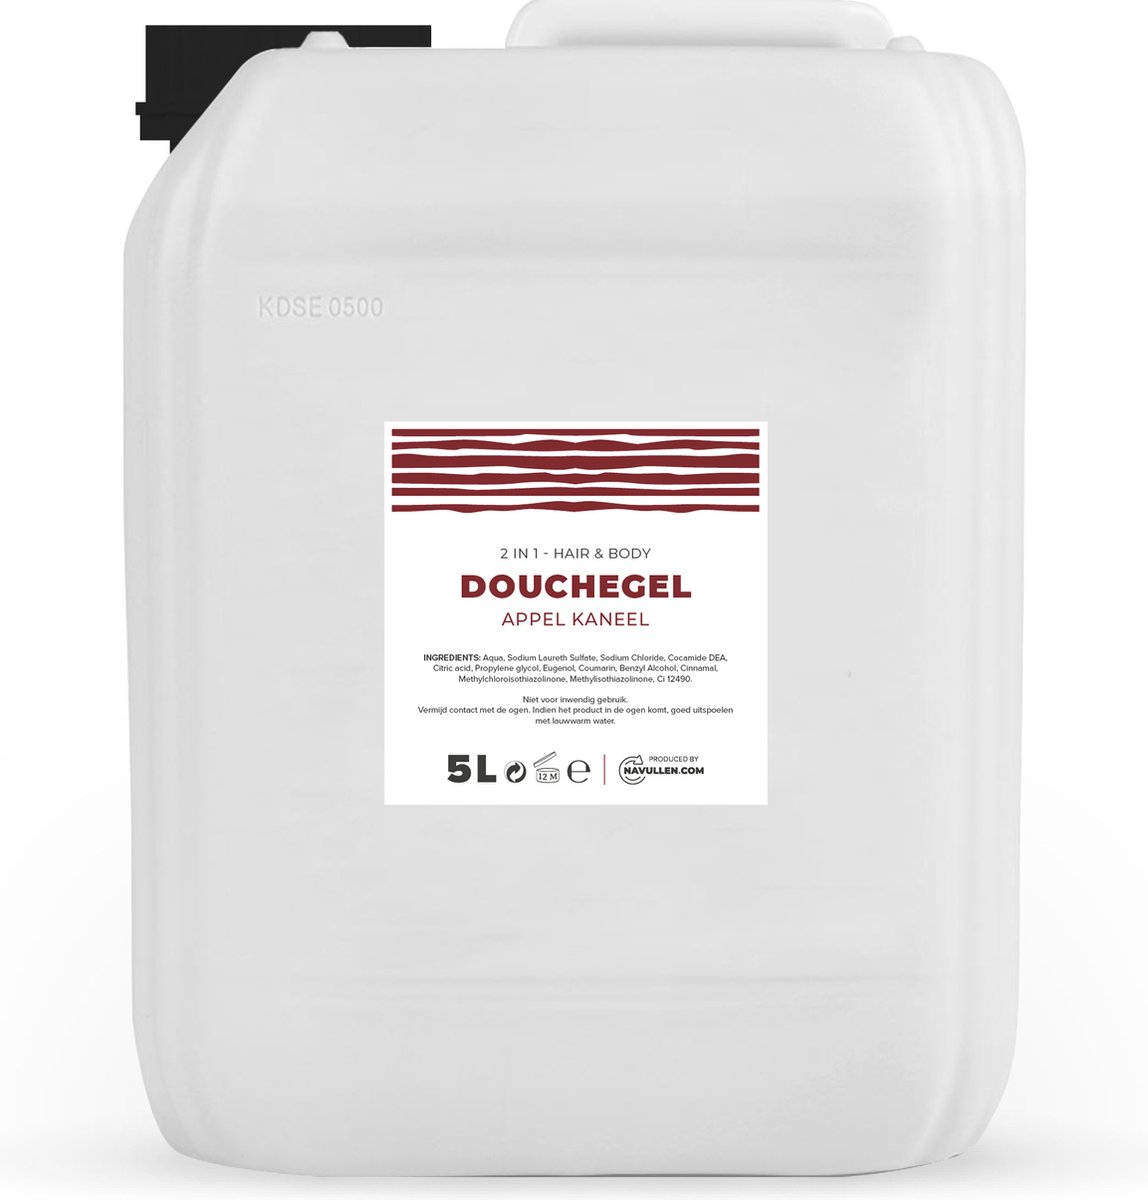 Douchegel - Appel Kaneel - 2 in 1 - Hair & Body - 5 Liter Jerrycan